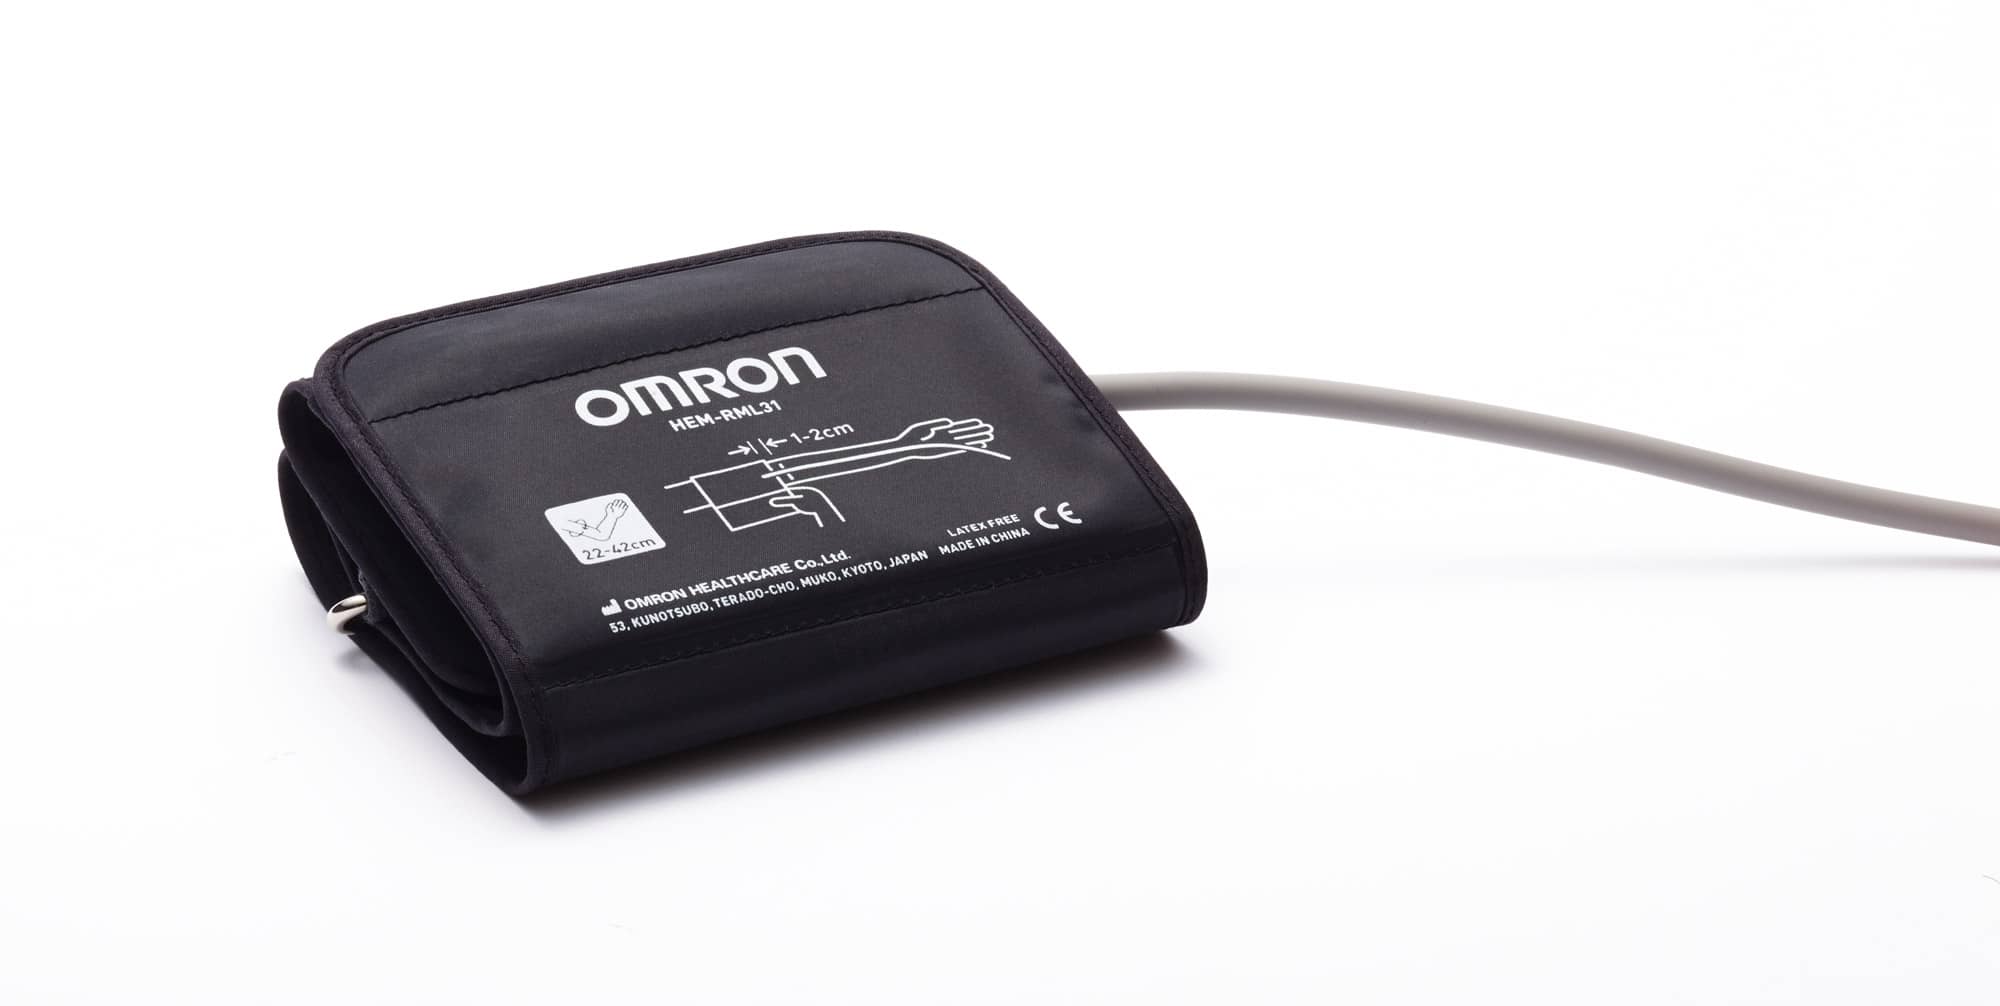 OMRON 7140T1 HEM 7142T1 Digital Bluetooth Blood Pressure Monitor